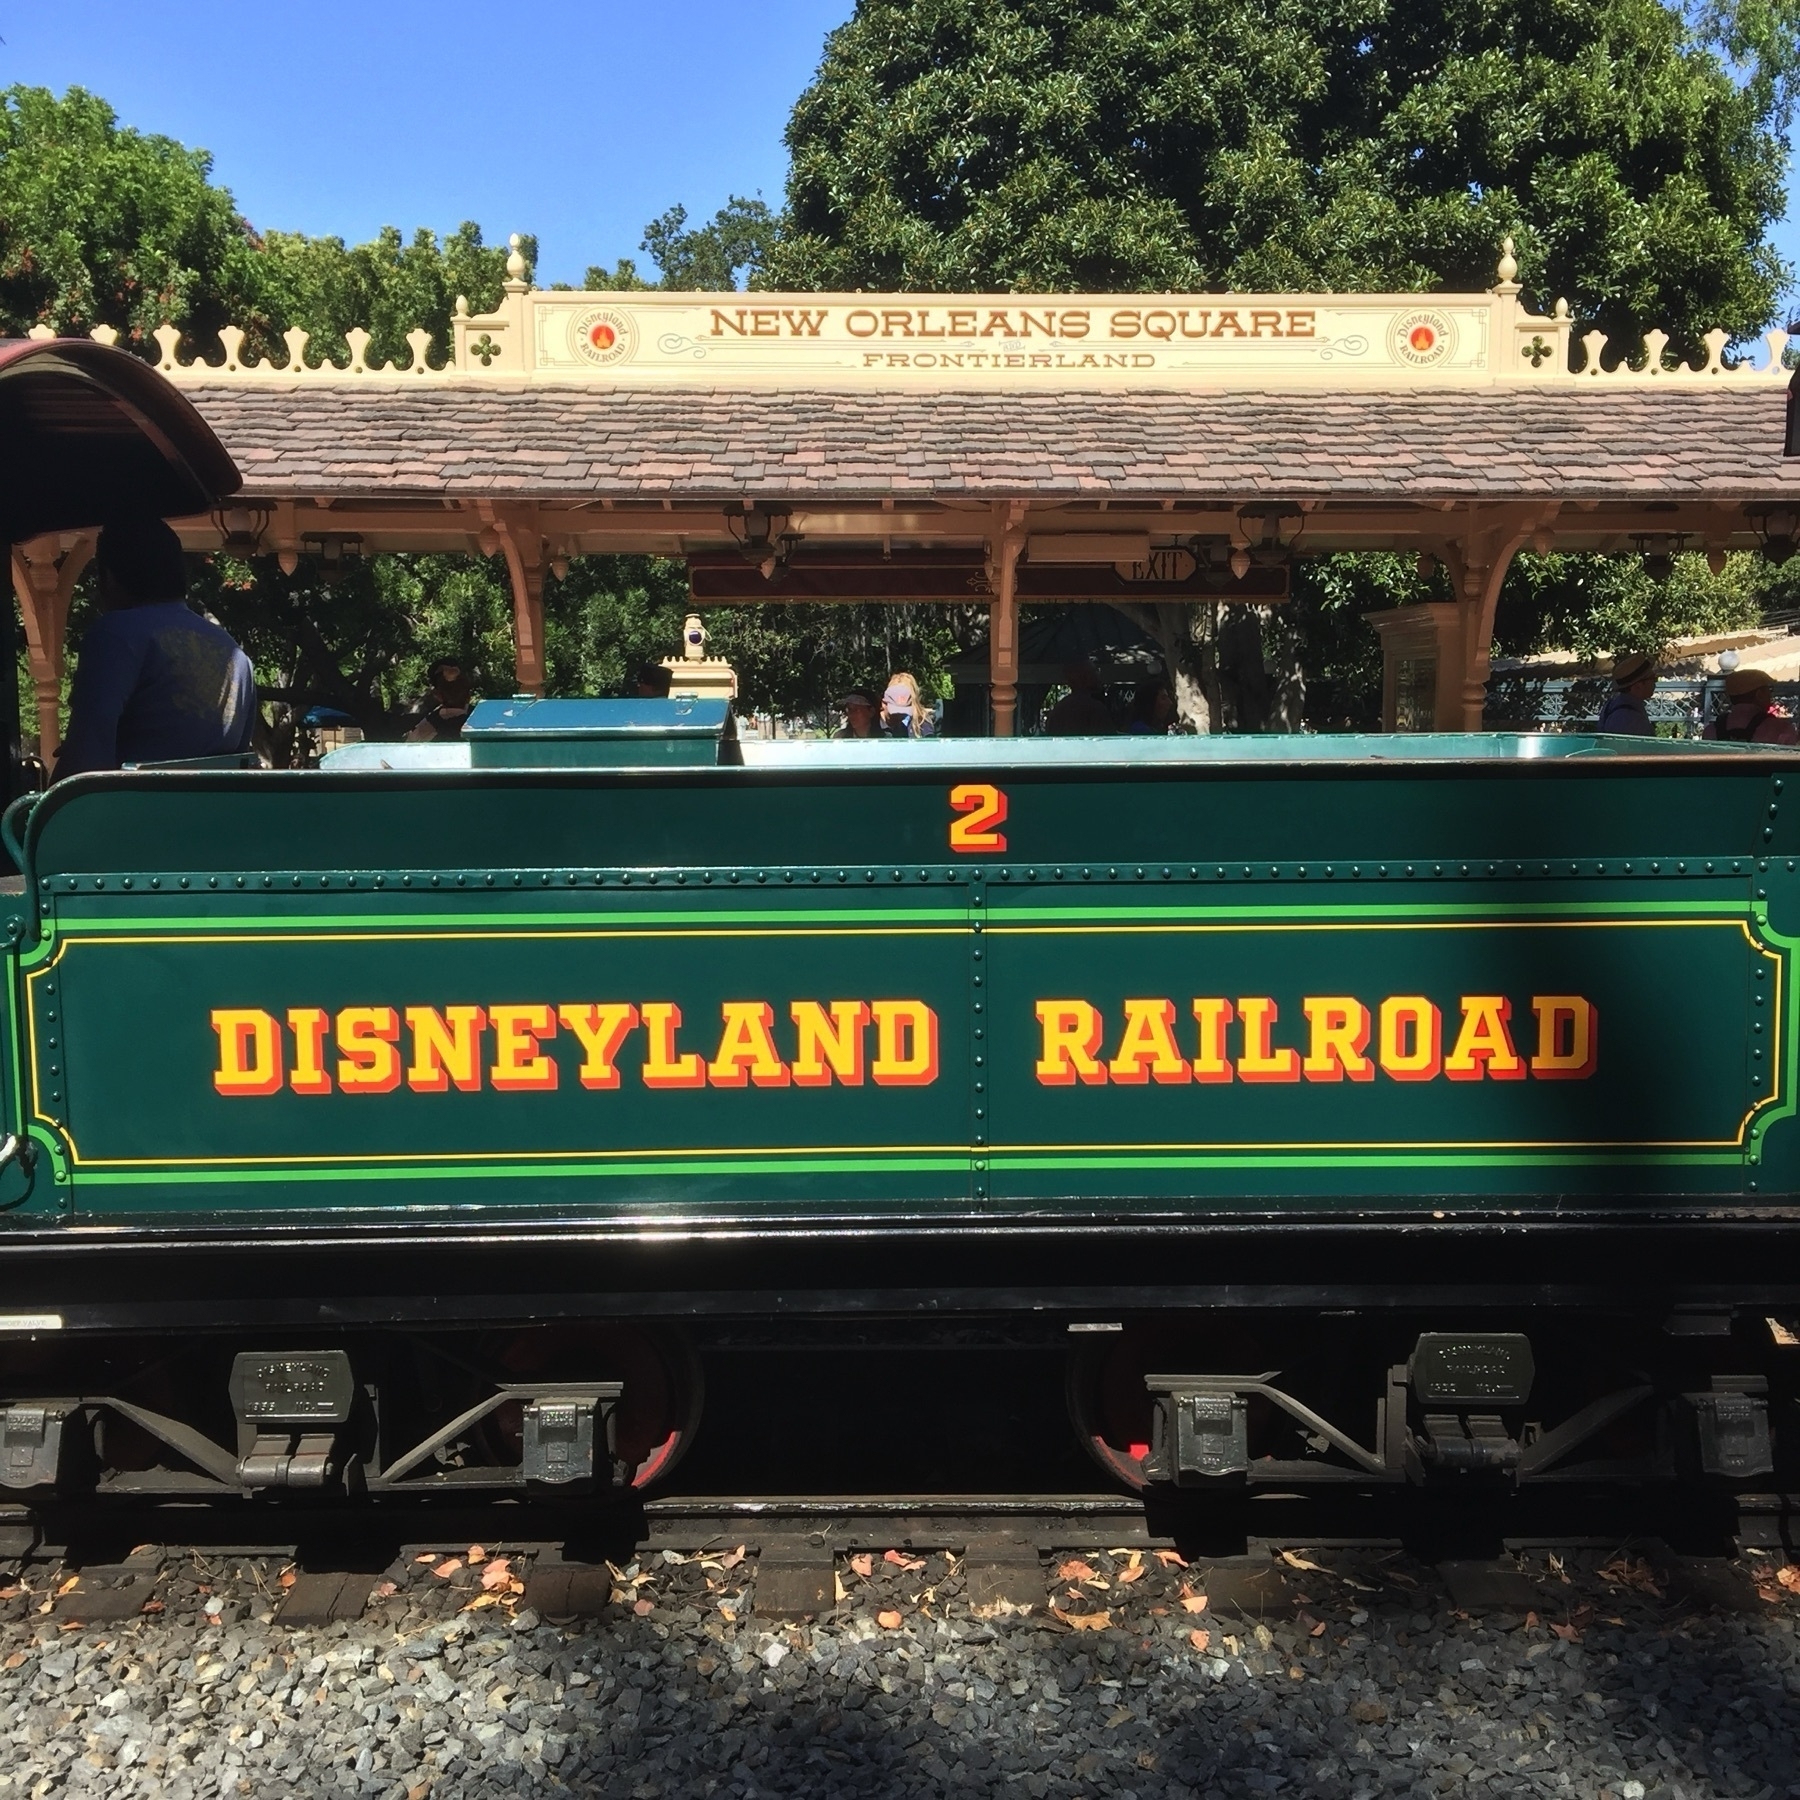 A dark green train Disneyland Railroad train car passing through New Orleans Square in Frontierland.